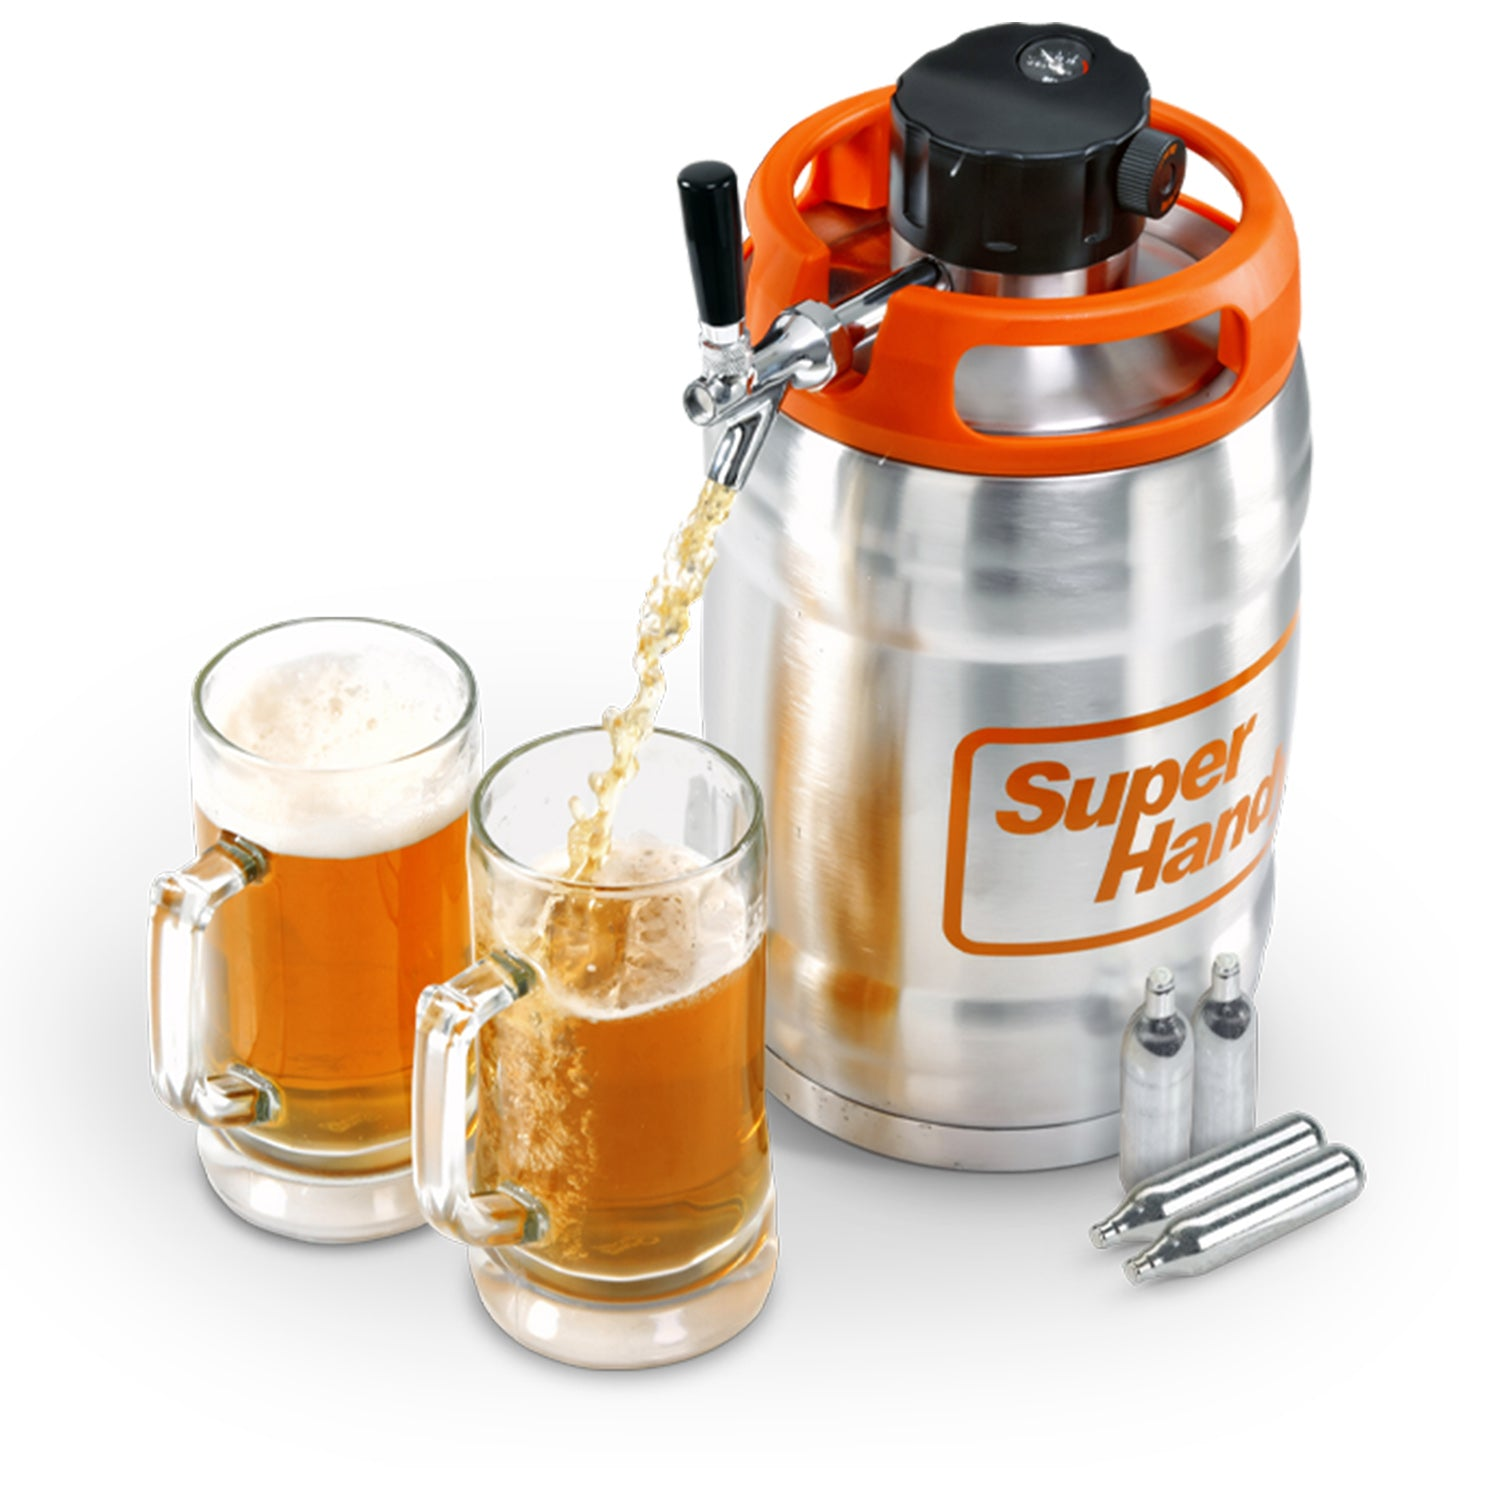 SuperHandy Pressurized Beer Keg - 170oz, 16g C02 Cartridge